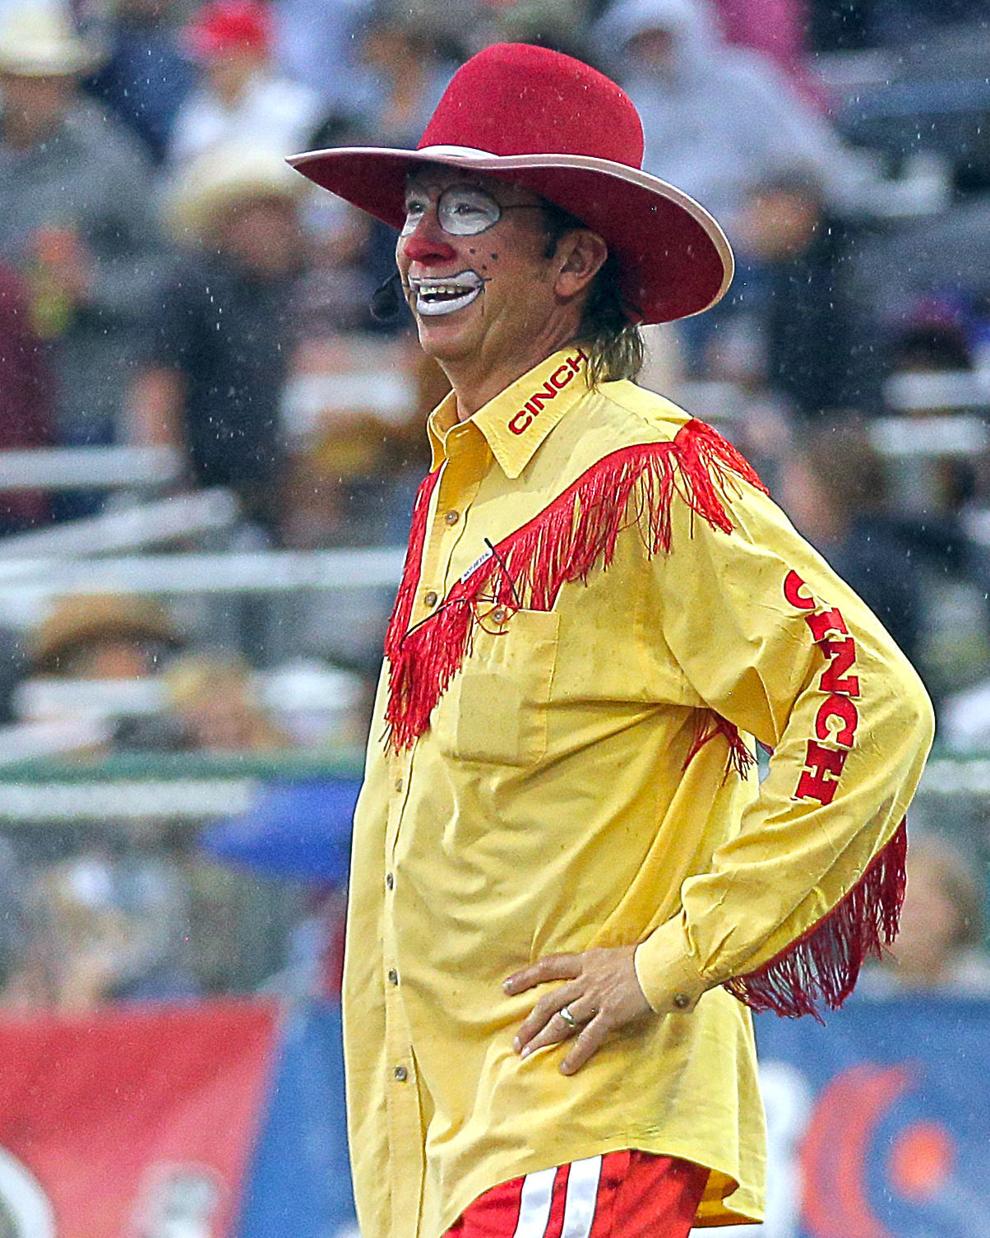 2021 Silver State Stampede Rodeo Clown John Harrison